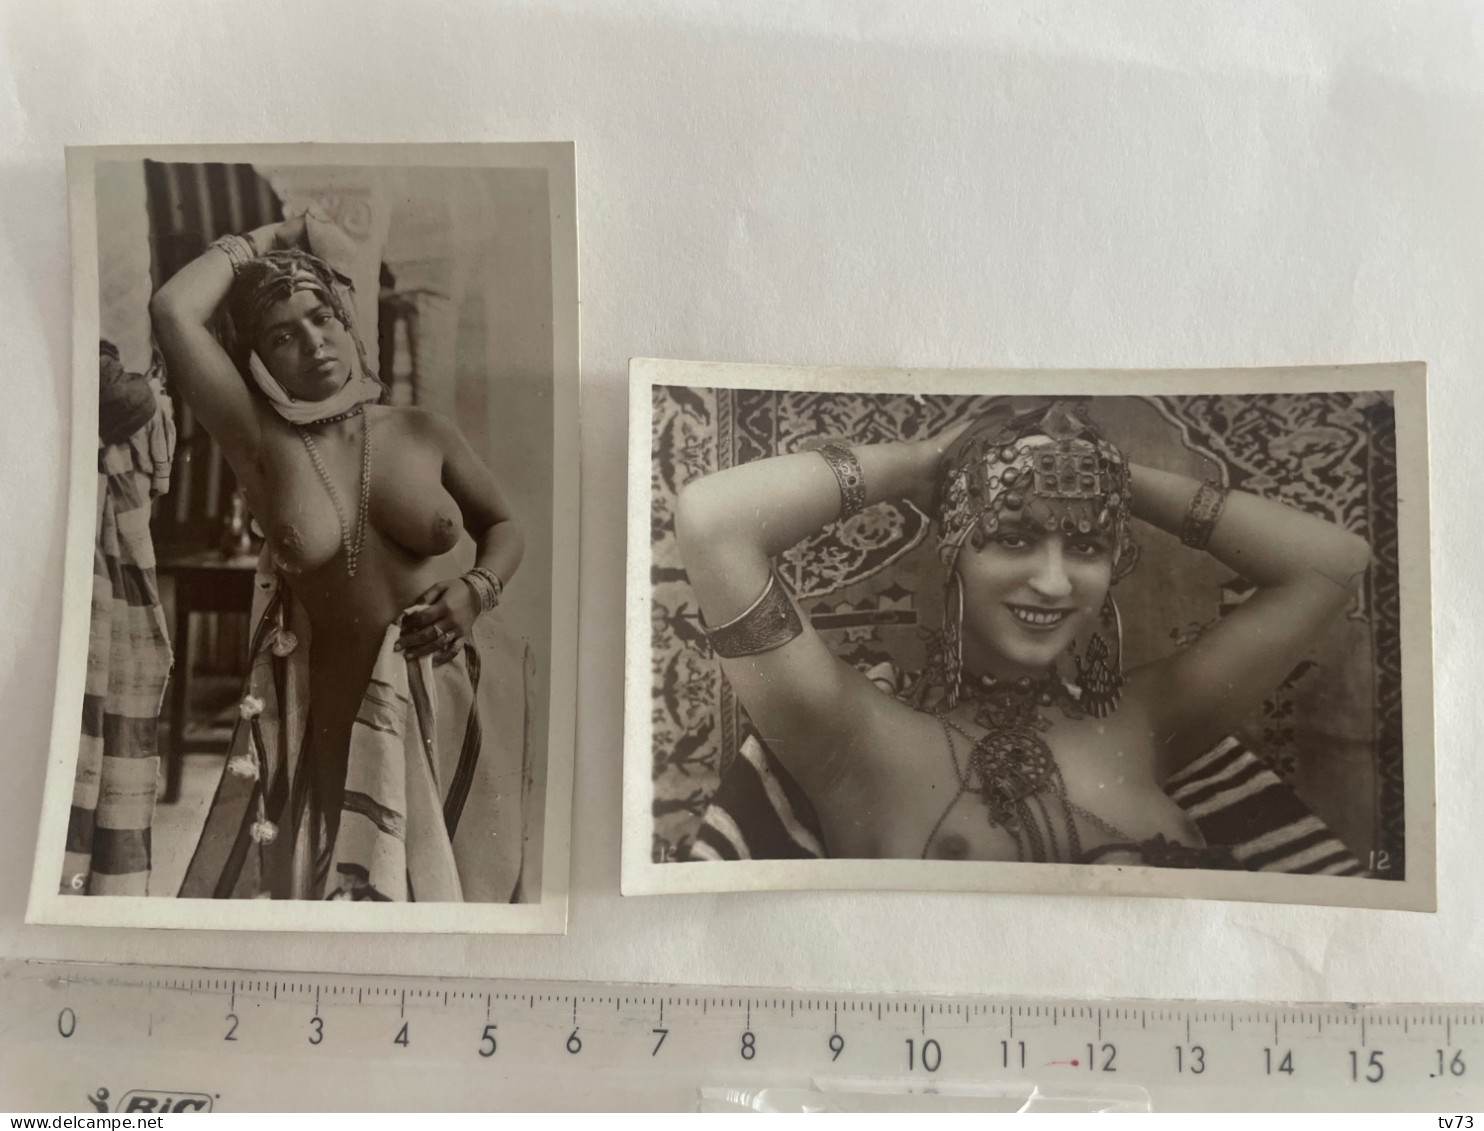 V034 - Lot 3 Petites Photos Souvenir MAROC - Femme Fatma Bédouine Mauresque Seins Nus - Non Classificati